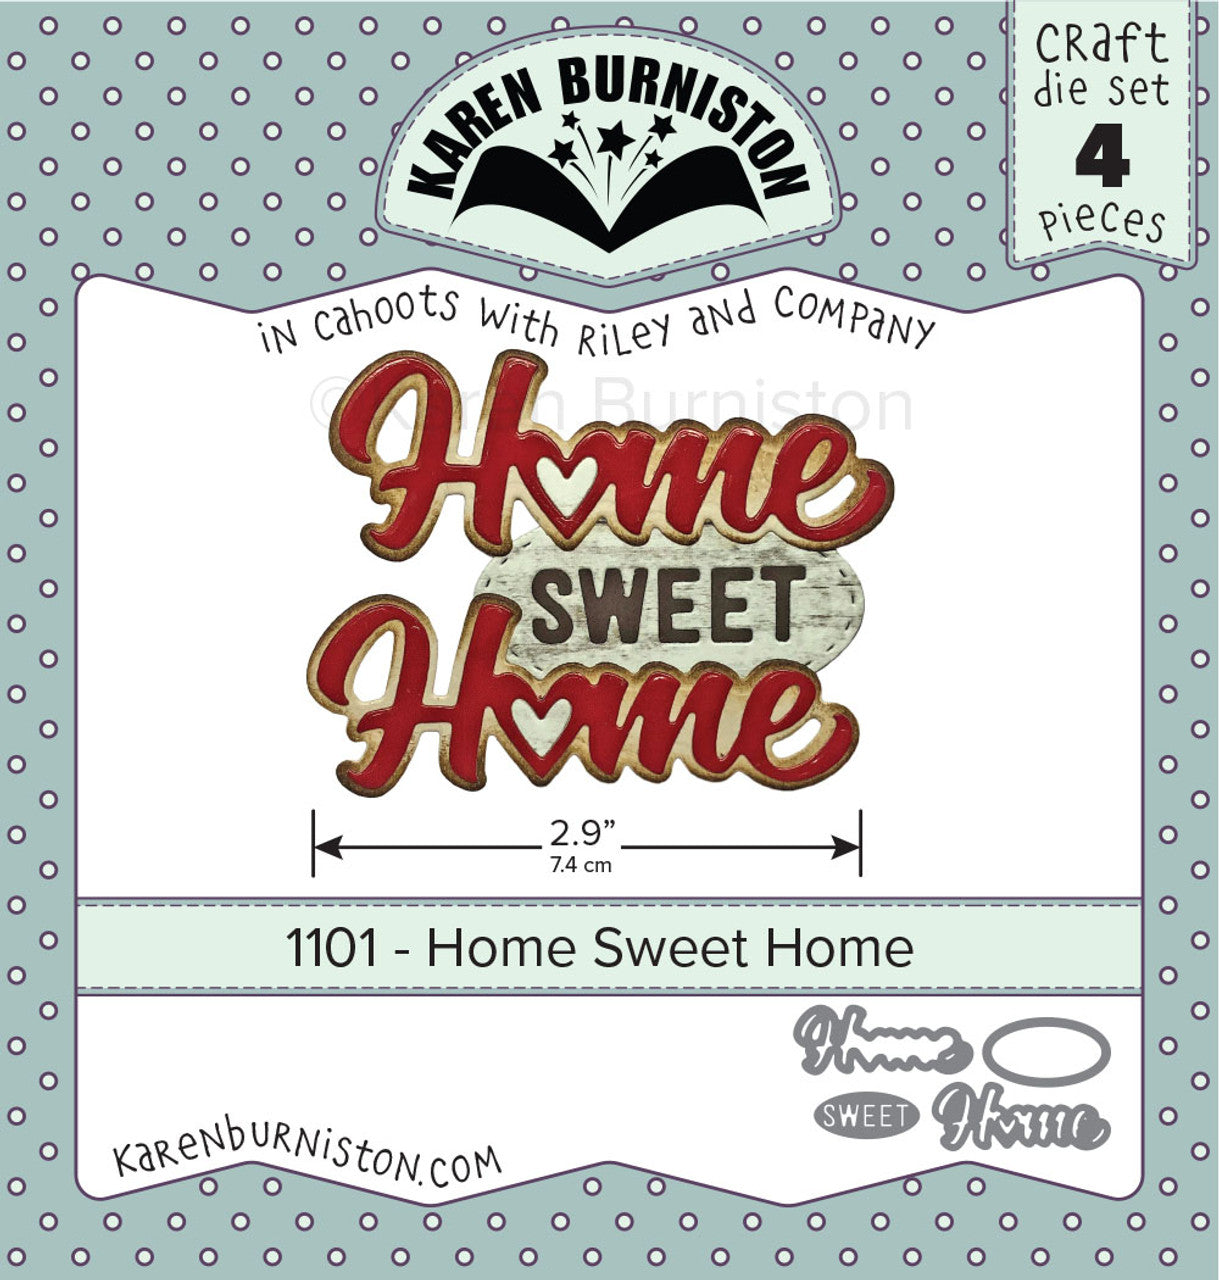 1101 Karen Burniston - Home Sweet Home